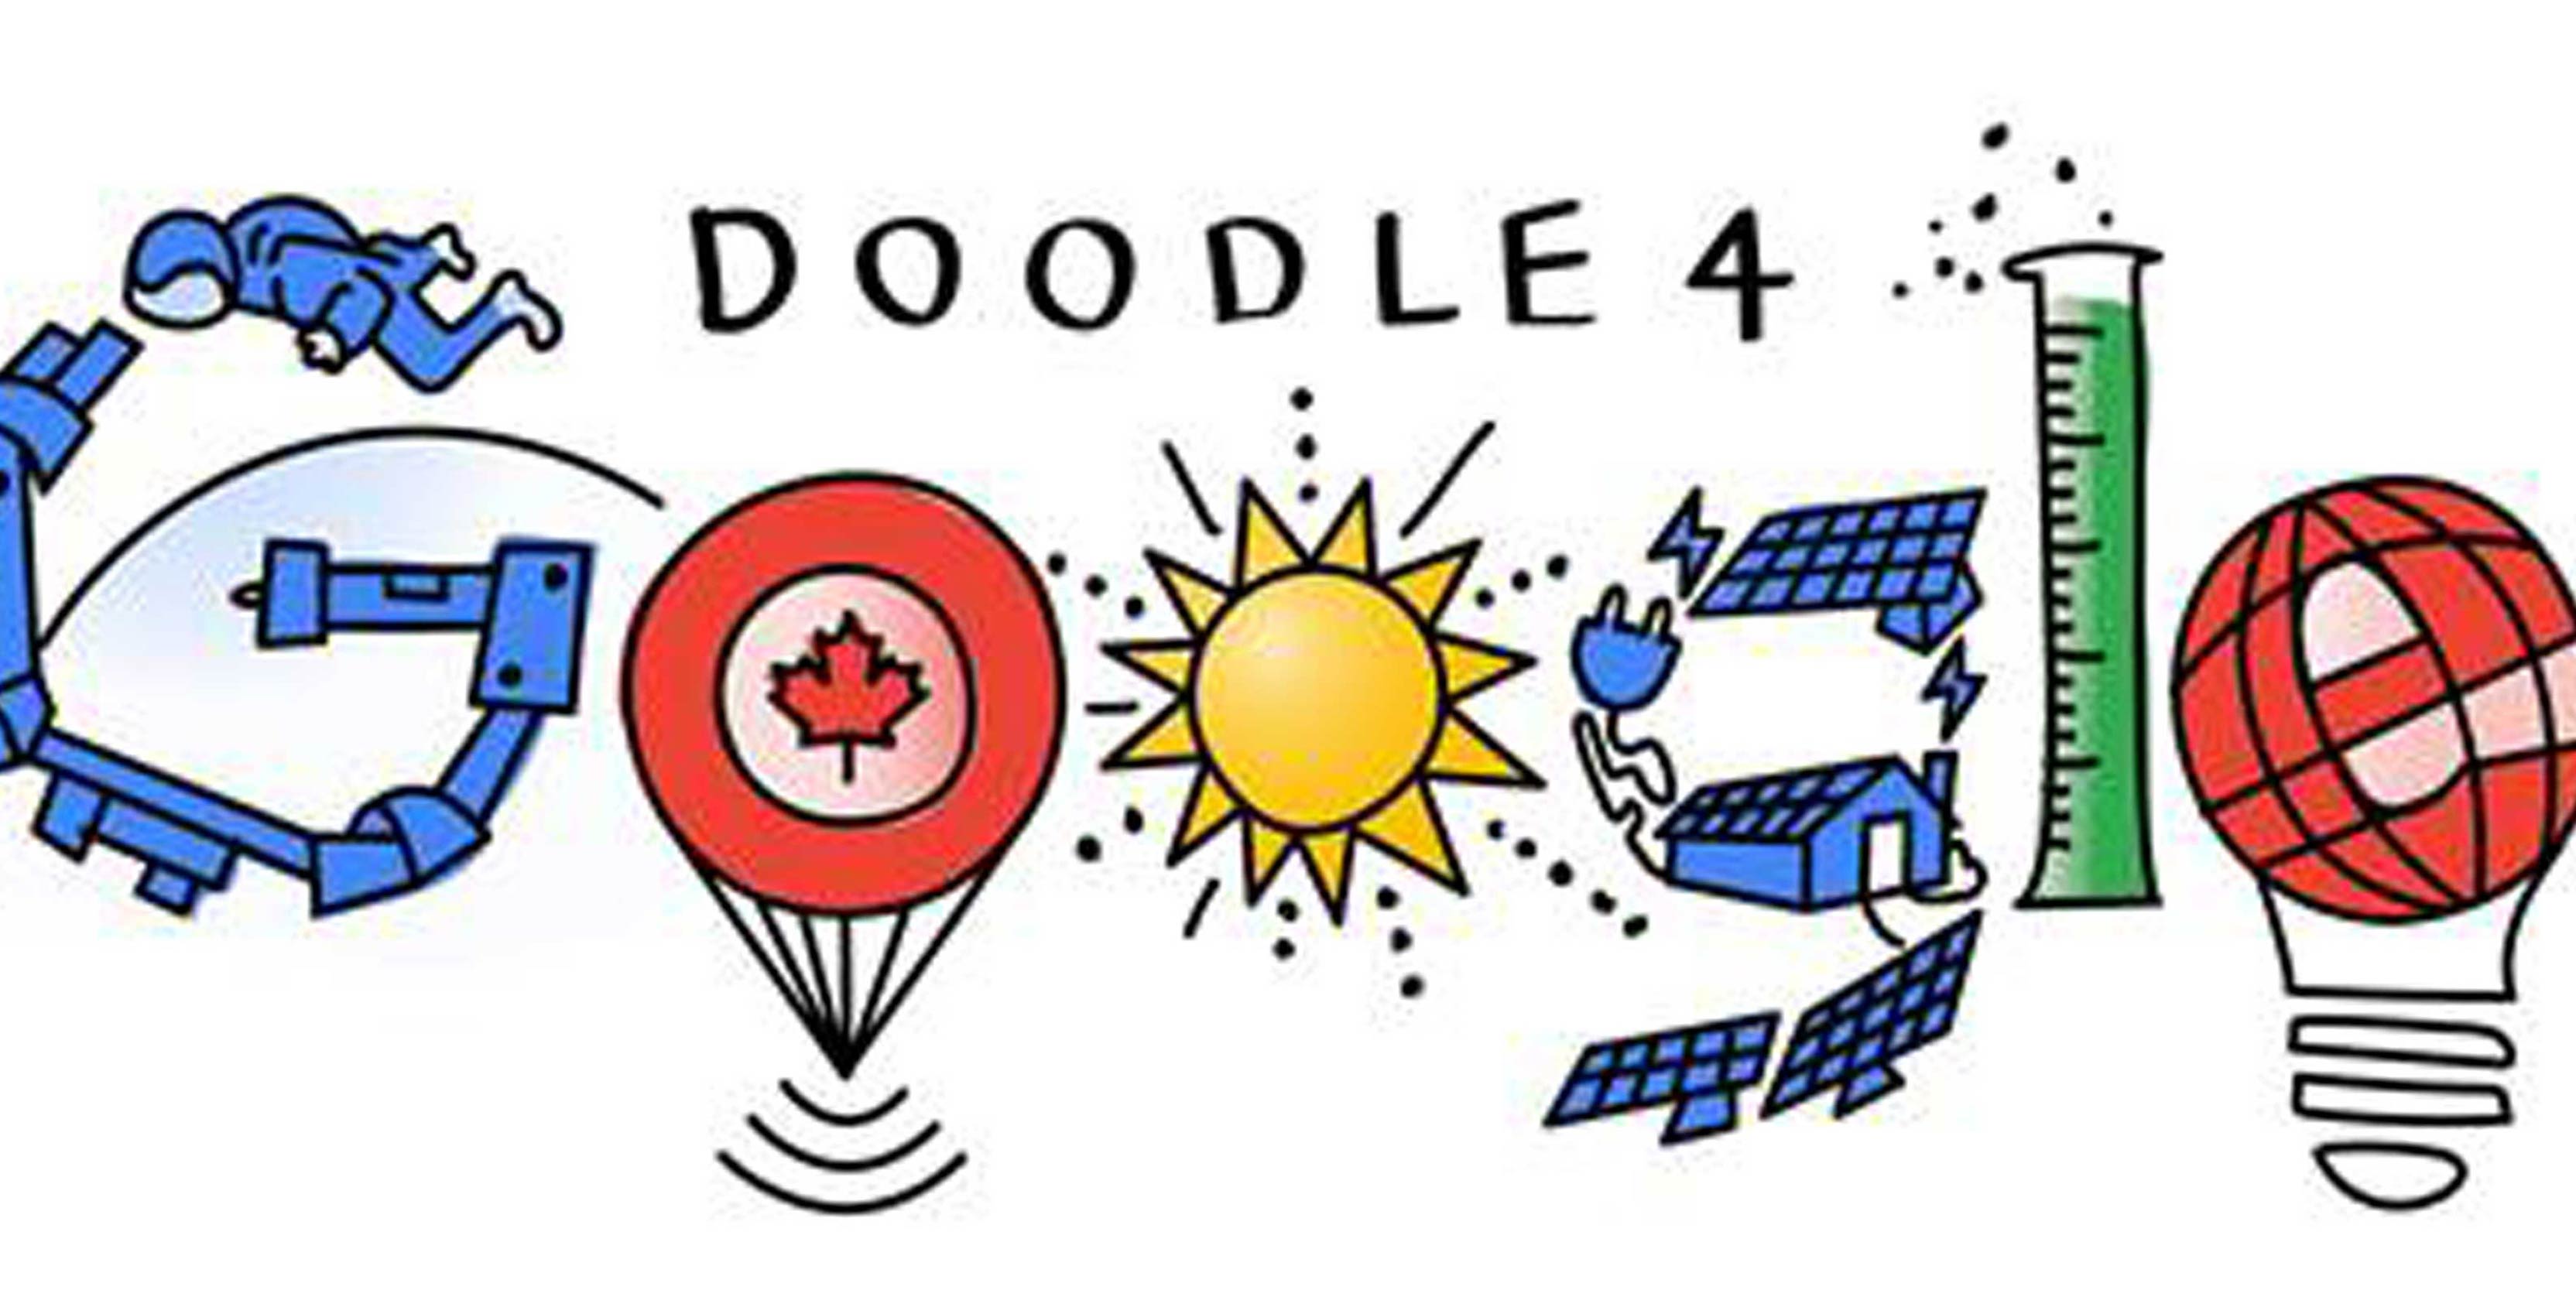 doodle4google winners